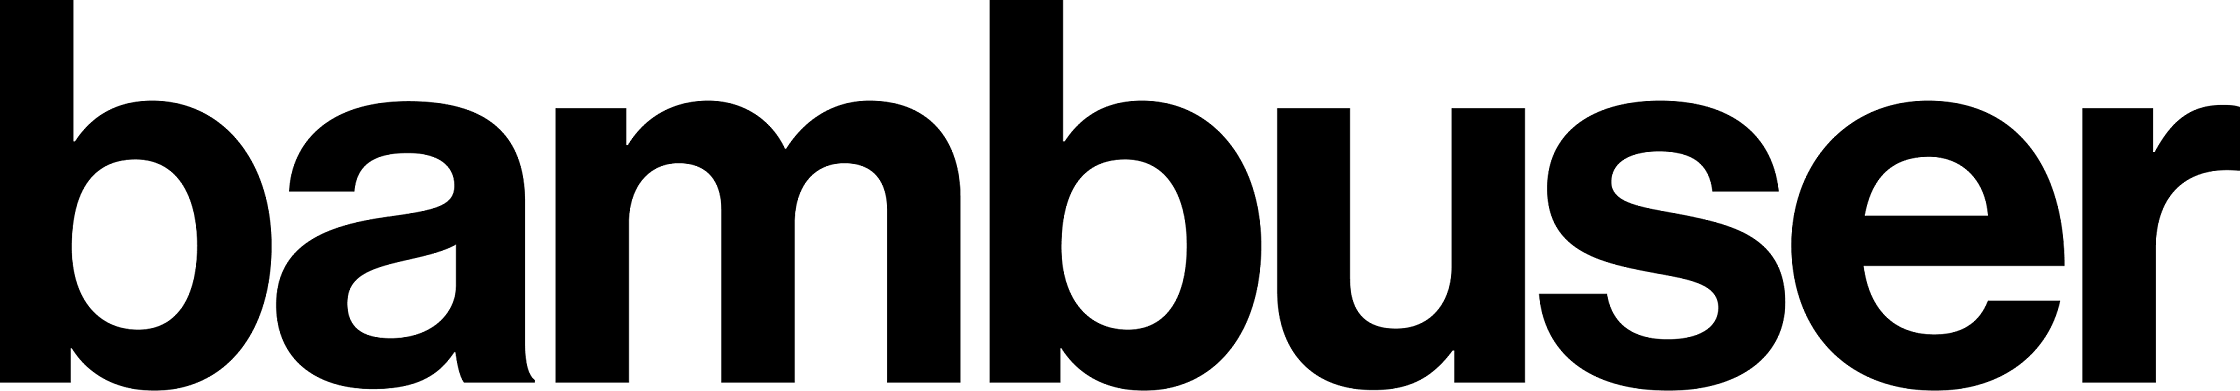 Bambuser Japan合同会社